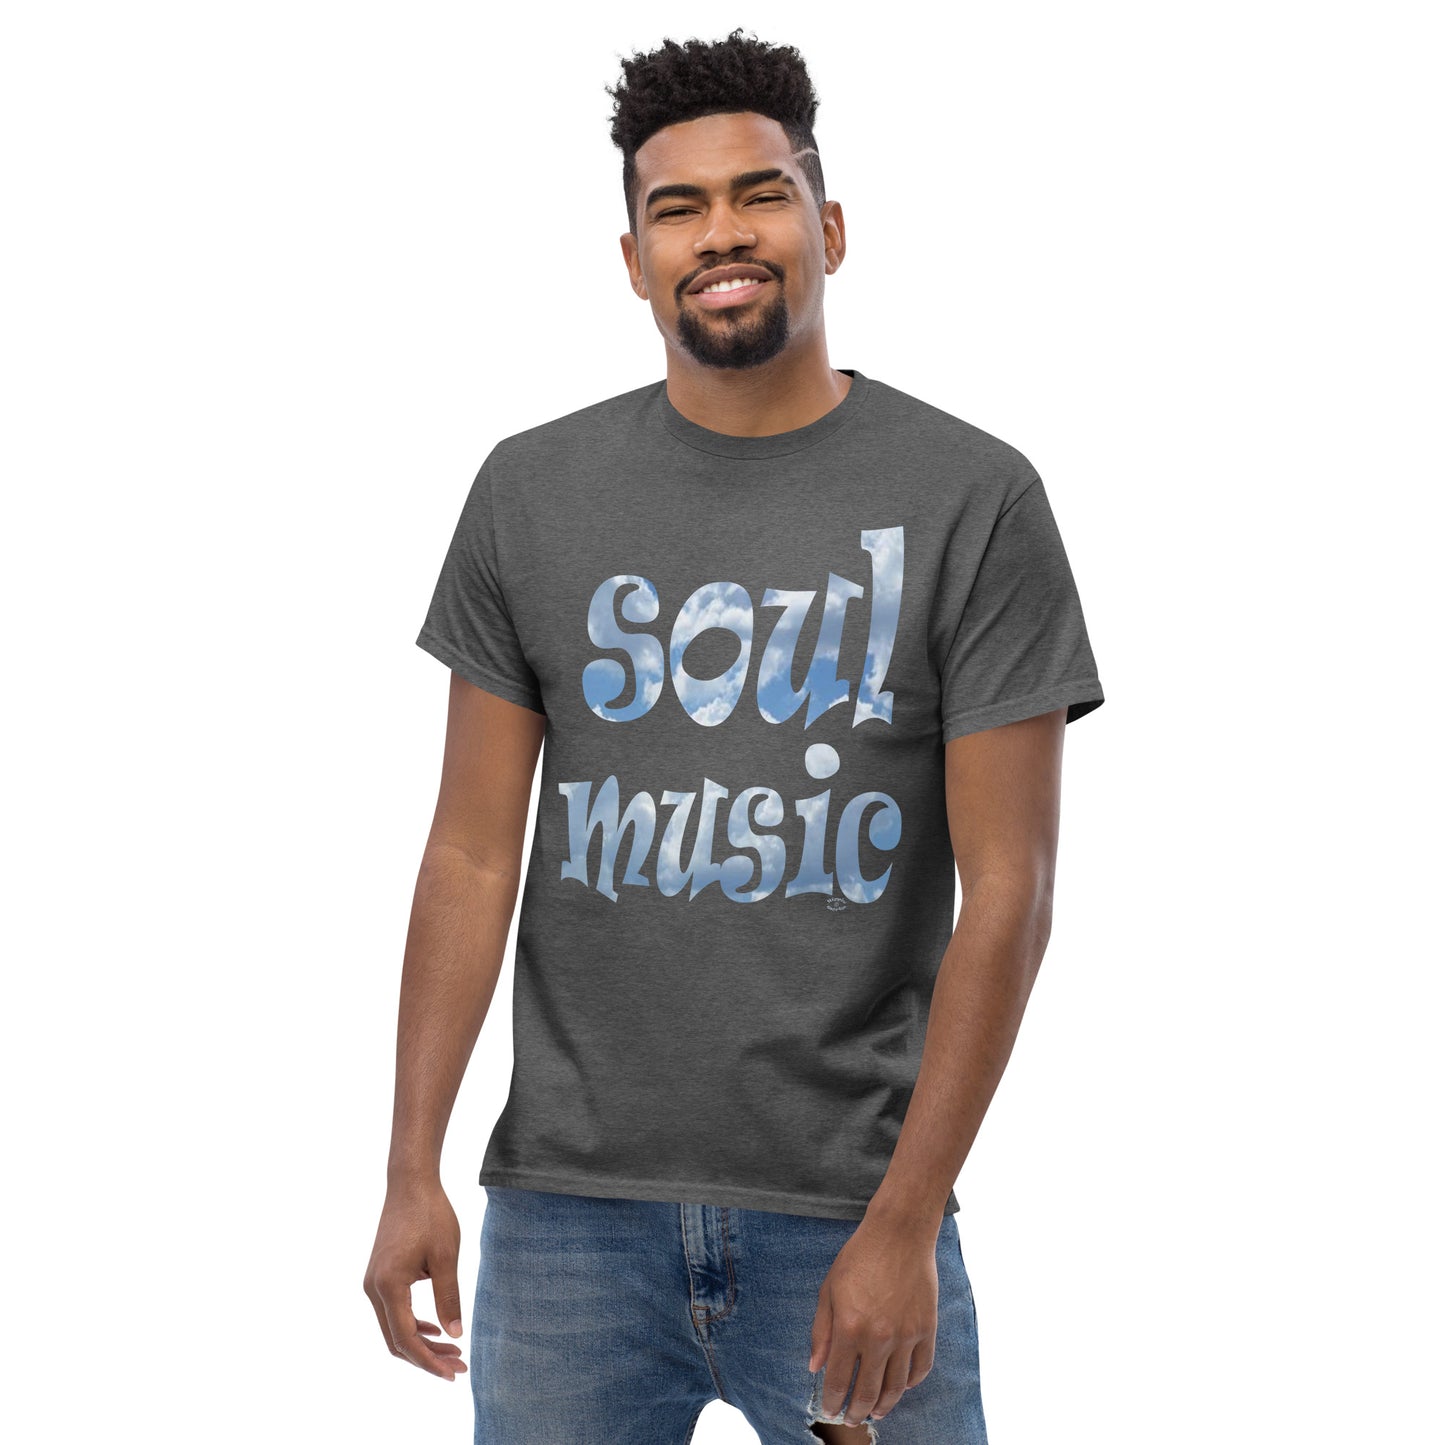 "Soul Music" Men's Classic Tee